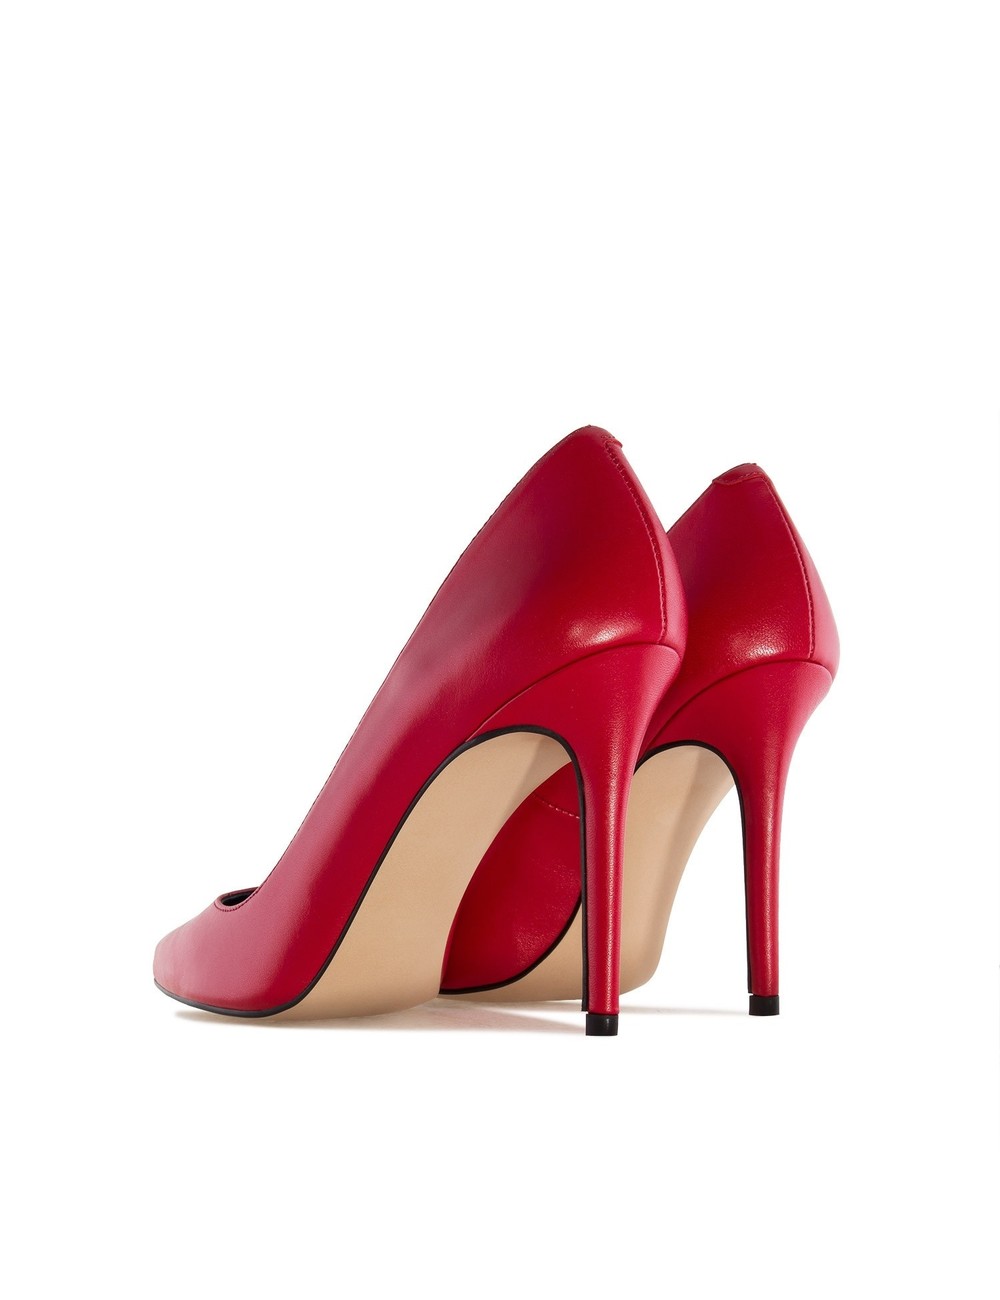 ANDRES MACHADO DIANA PUMPS RED LEATHER - Shoebidoo Shoes | Giaro high heels